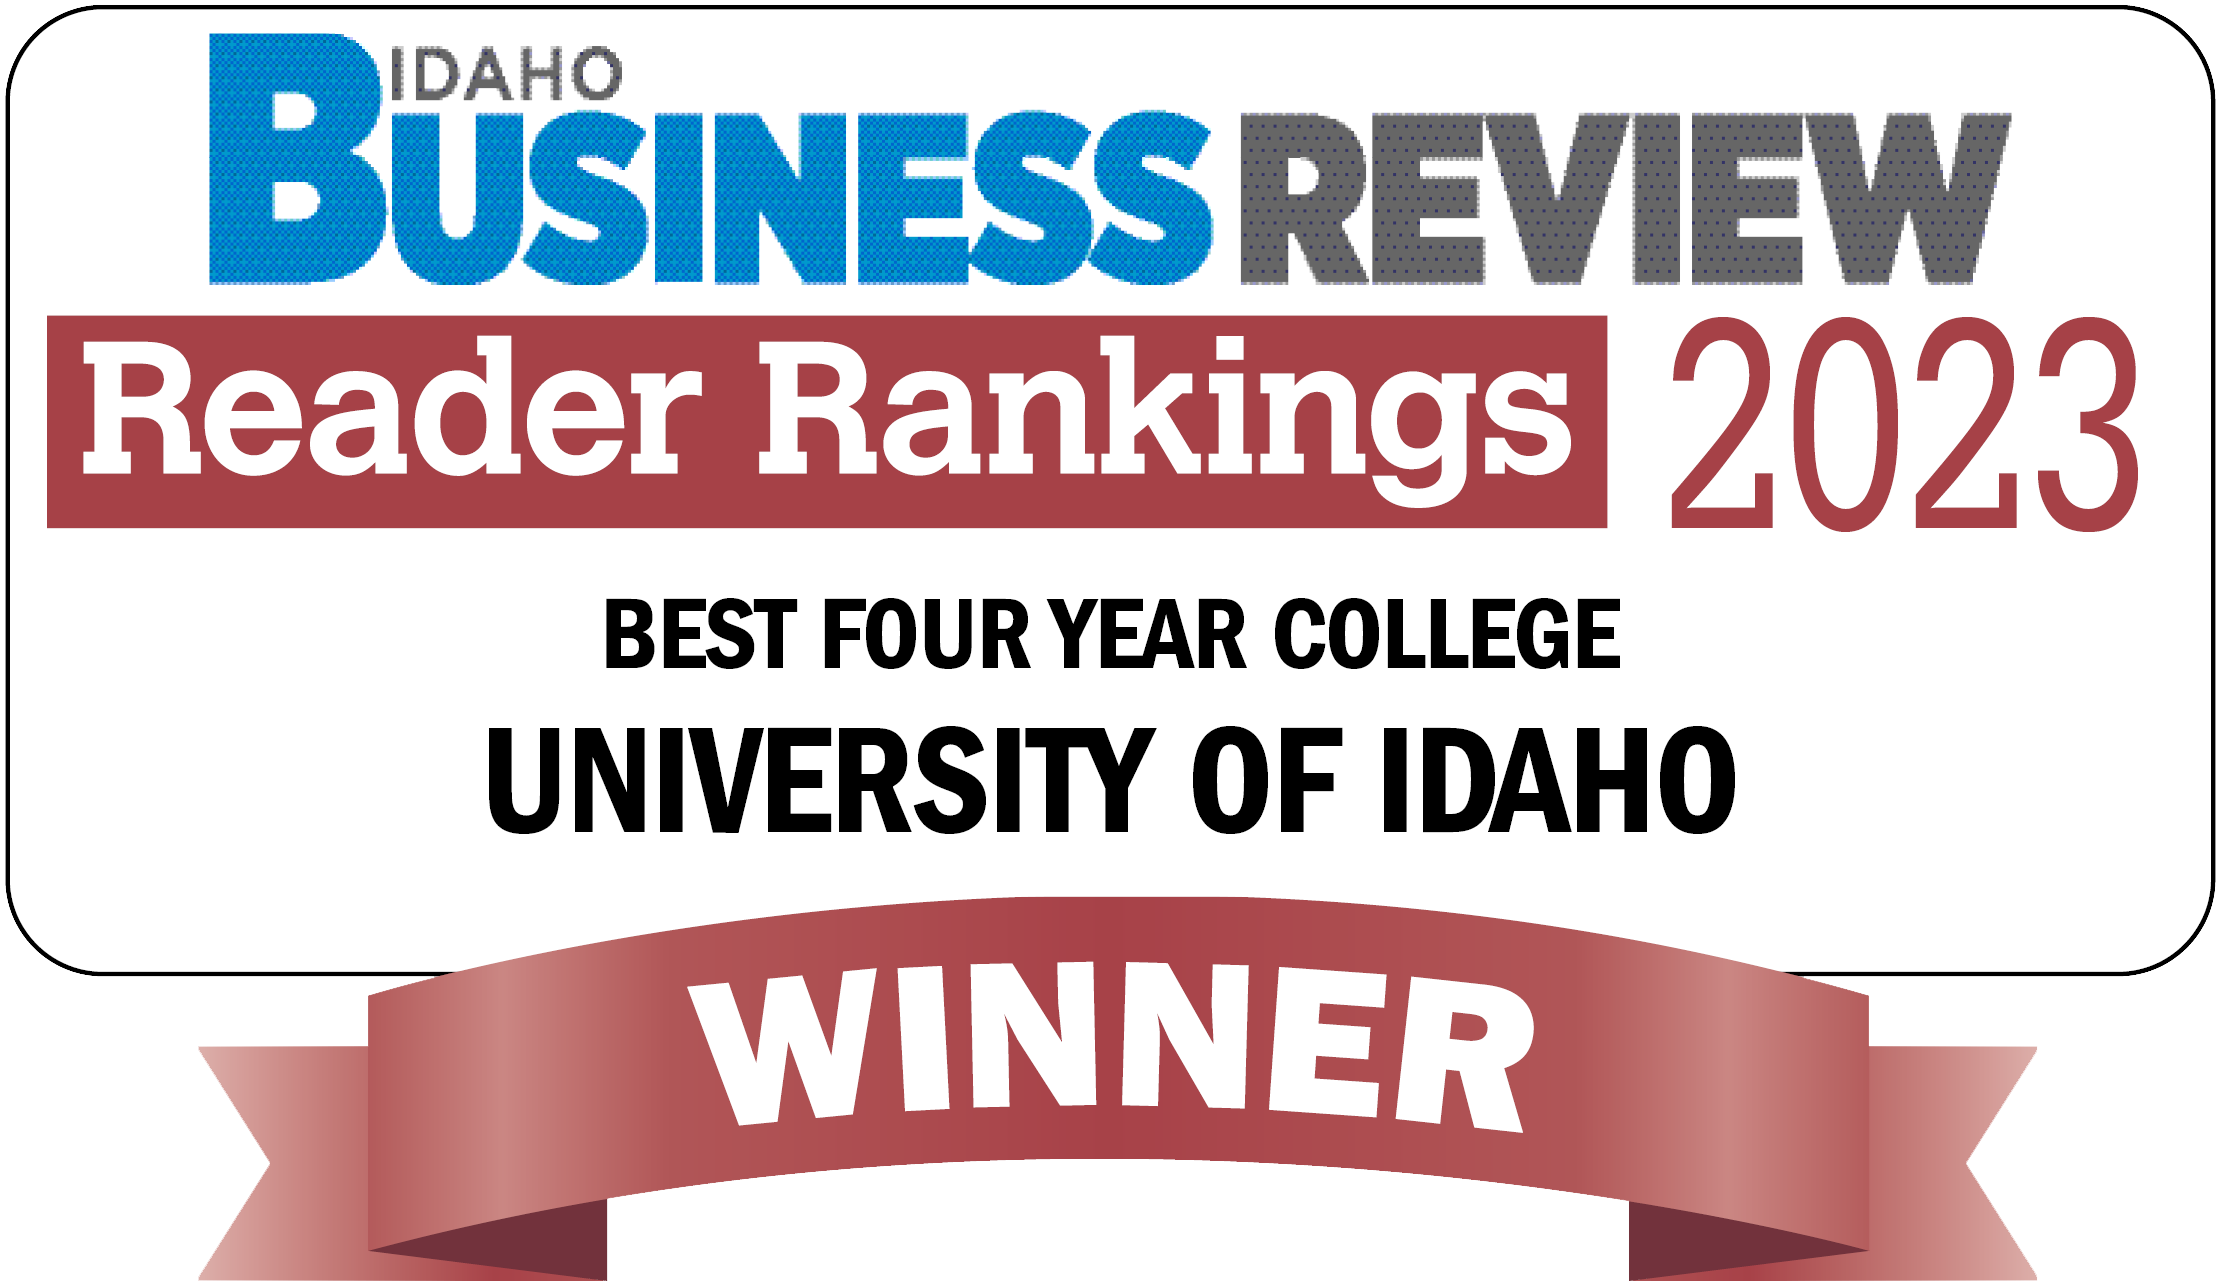 Idaho Business Review Reader Rankings 2023 Best Four Year College Winner: University of Idaho